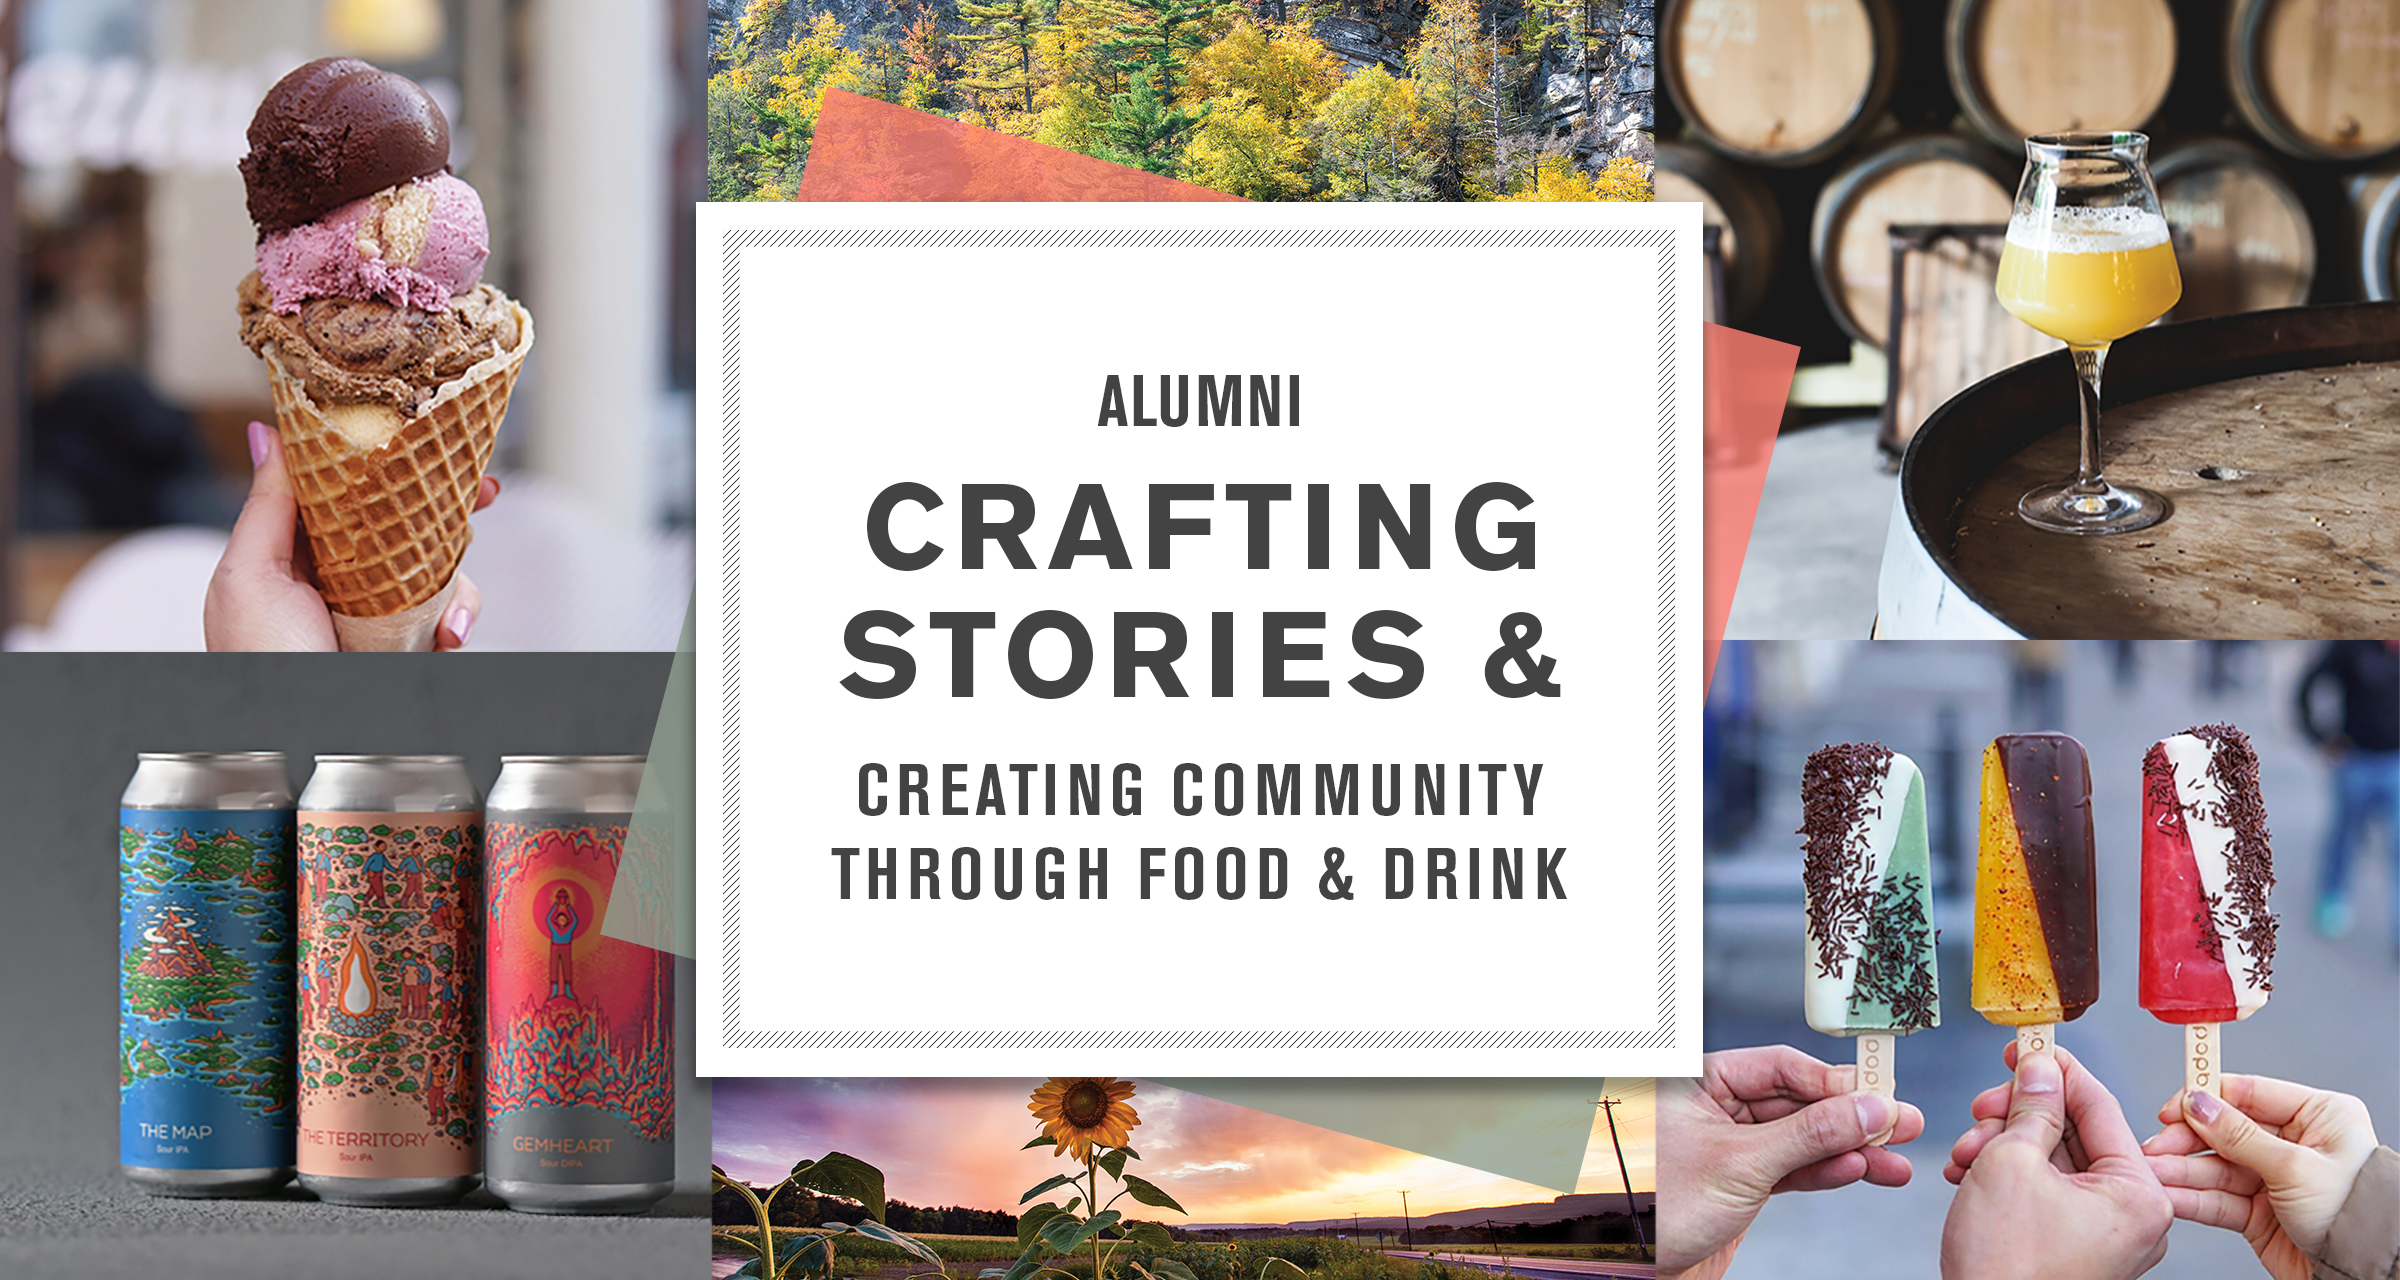 alumni crafting stories & creating community through food & drink